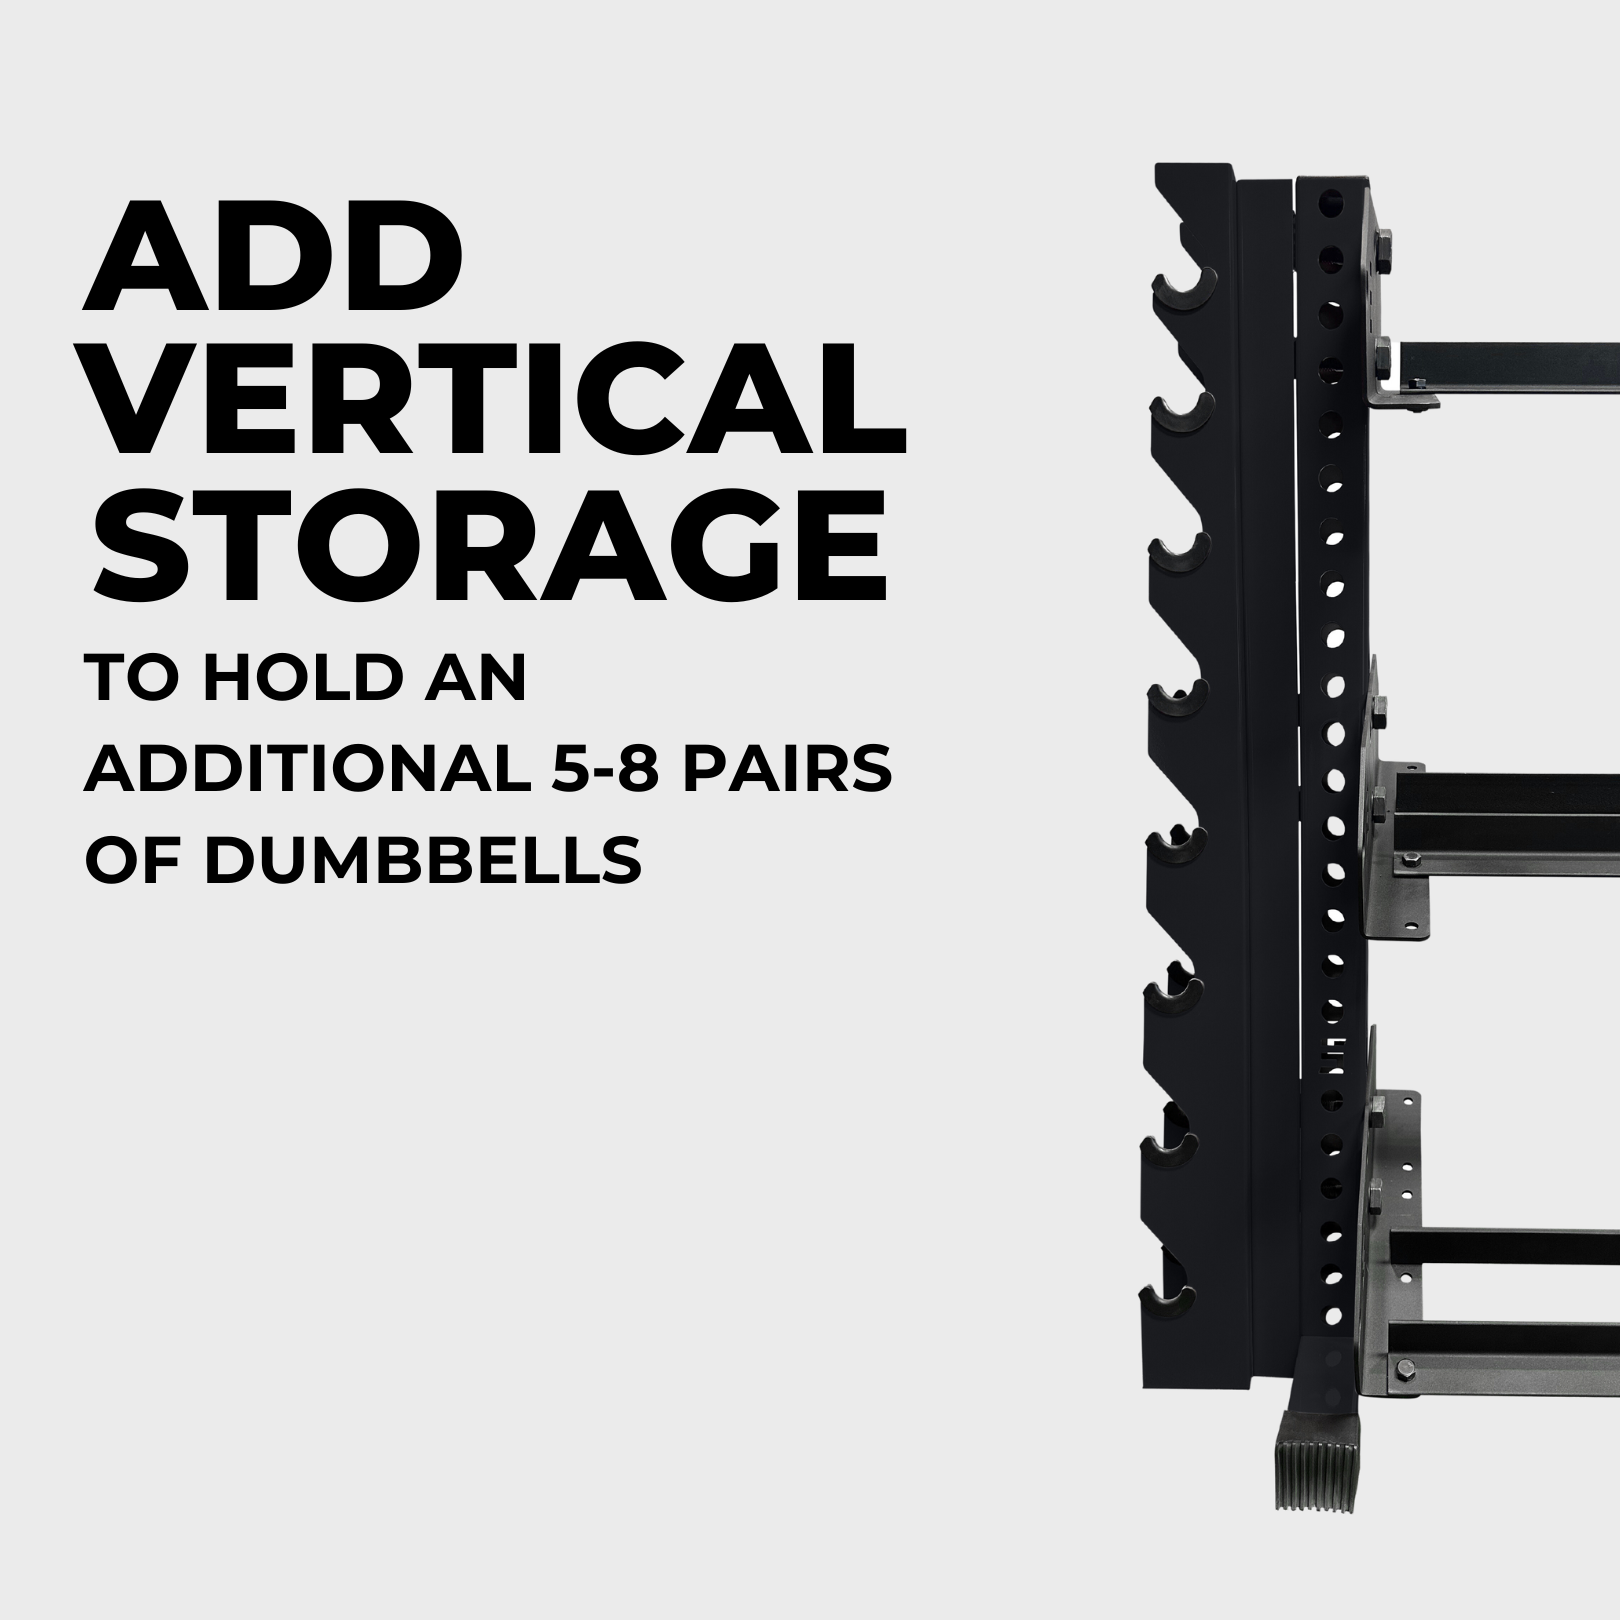 Vertical Dumbbell Storage Add-on for Horizontal Rack